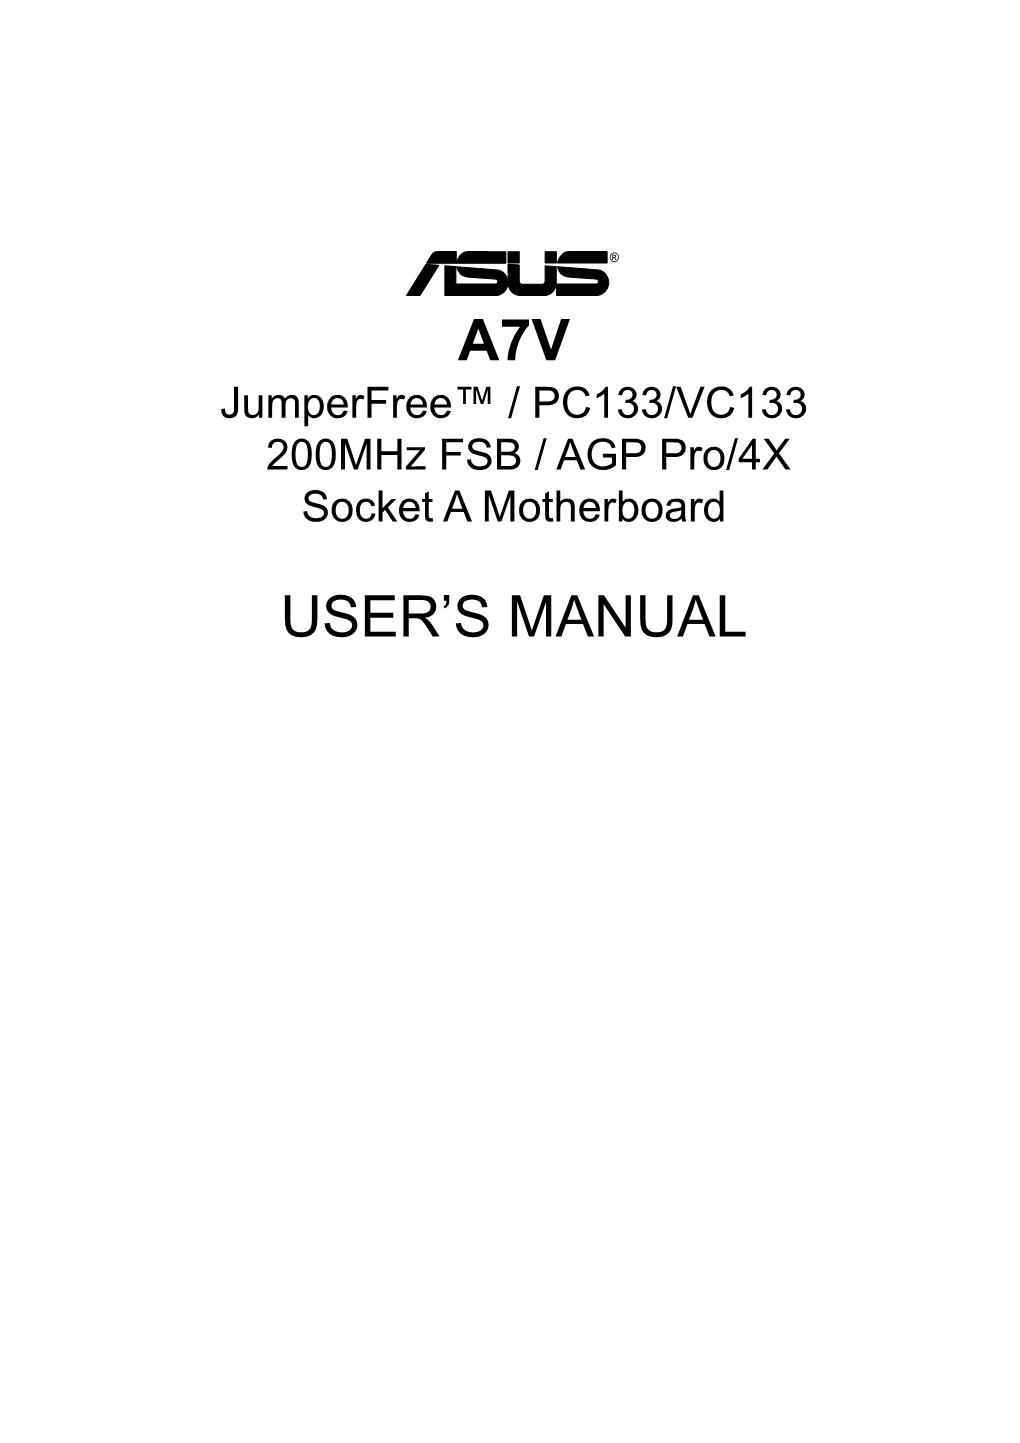 ASUS A7V User's Manual